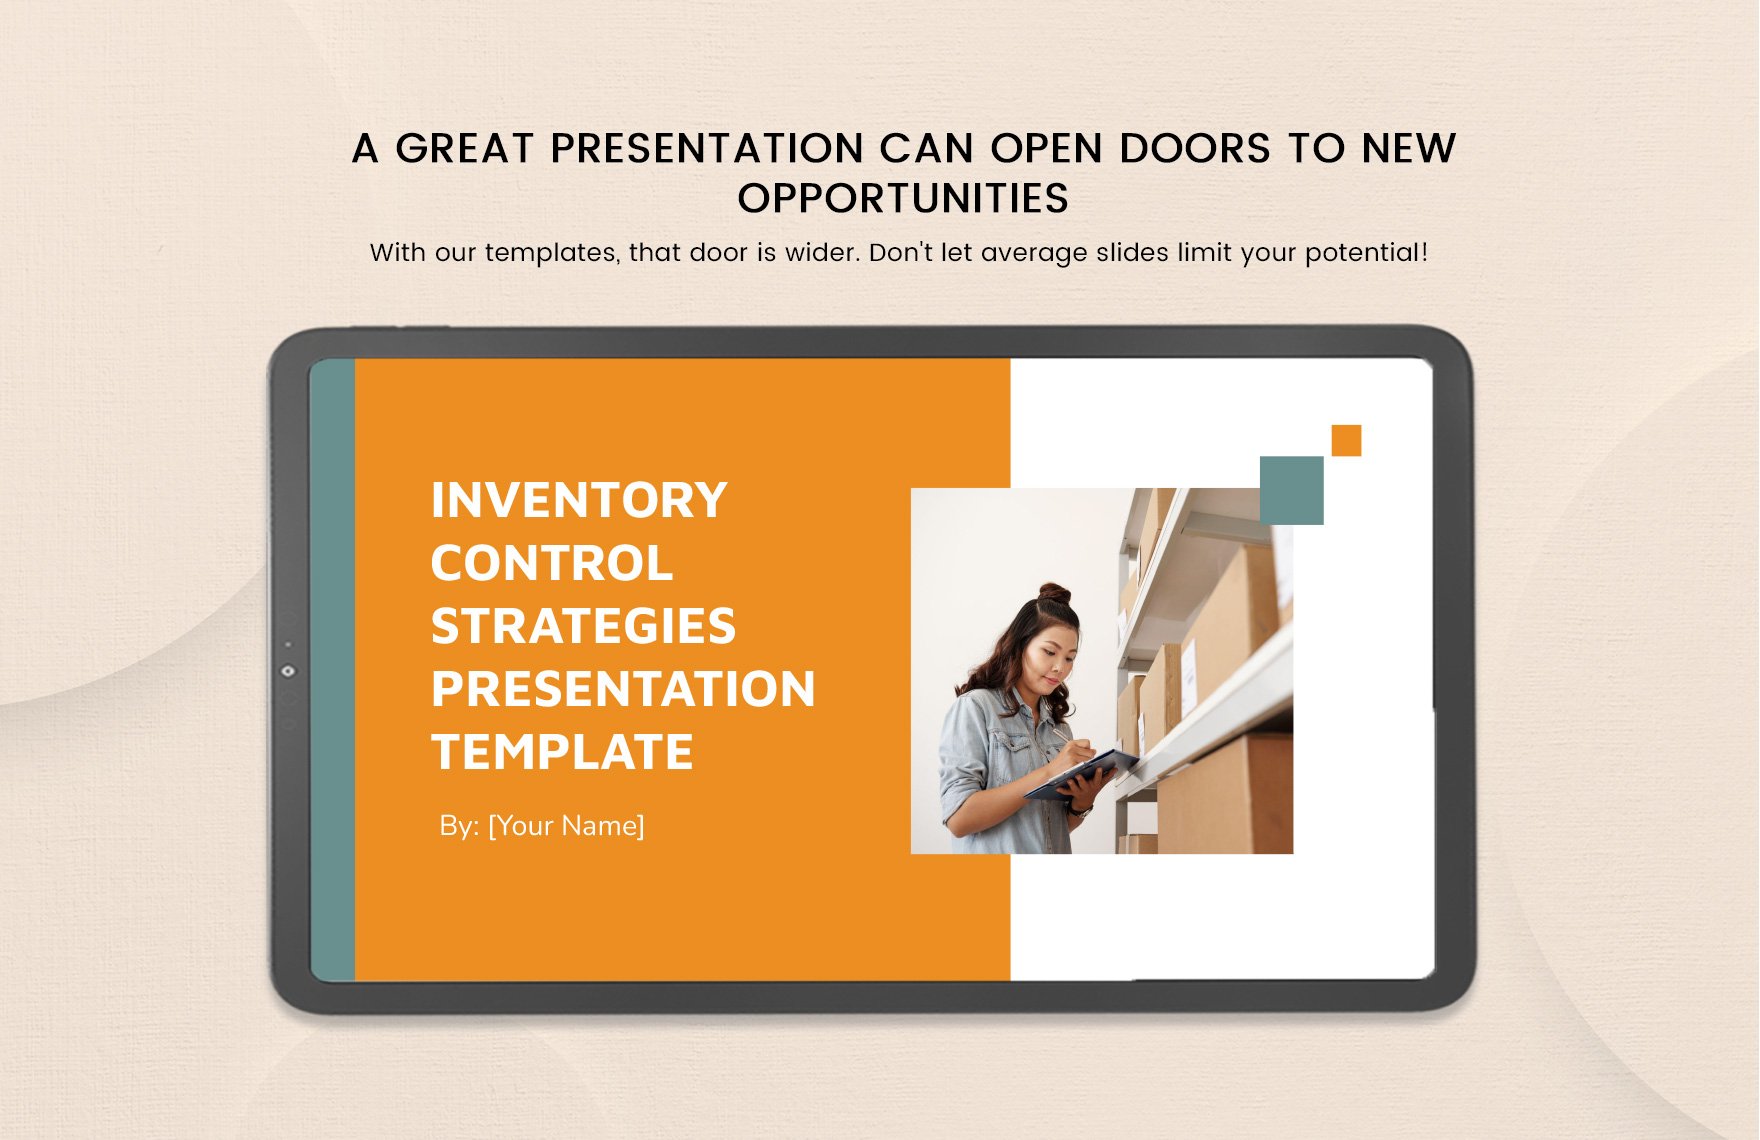 Inventory Control Strategies Presentation Template